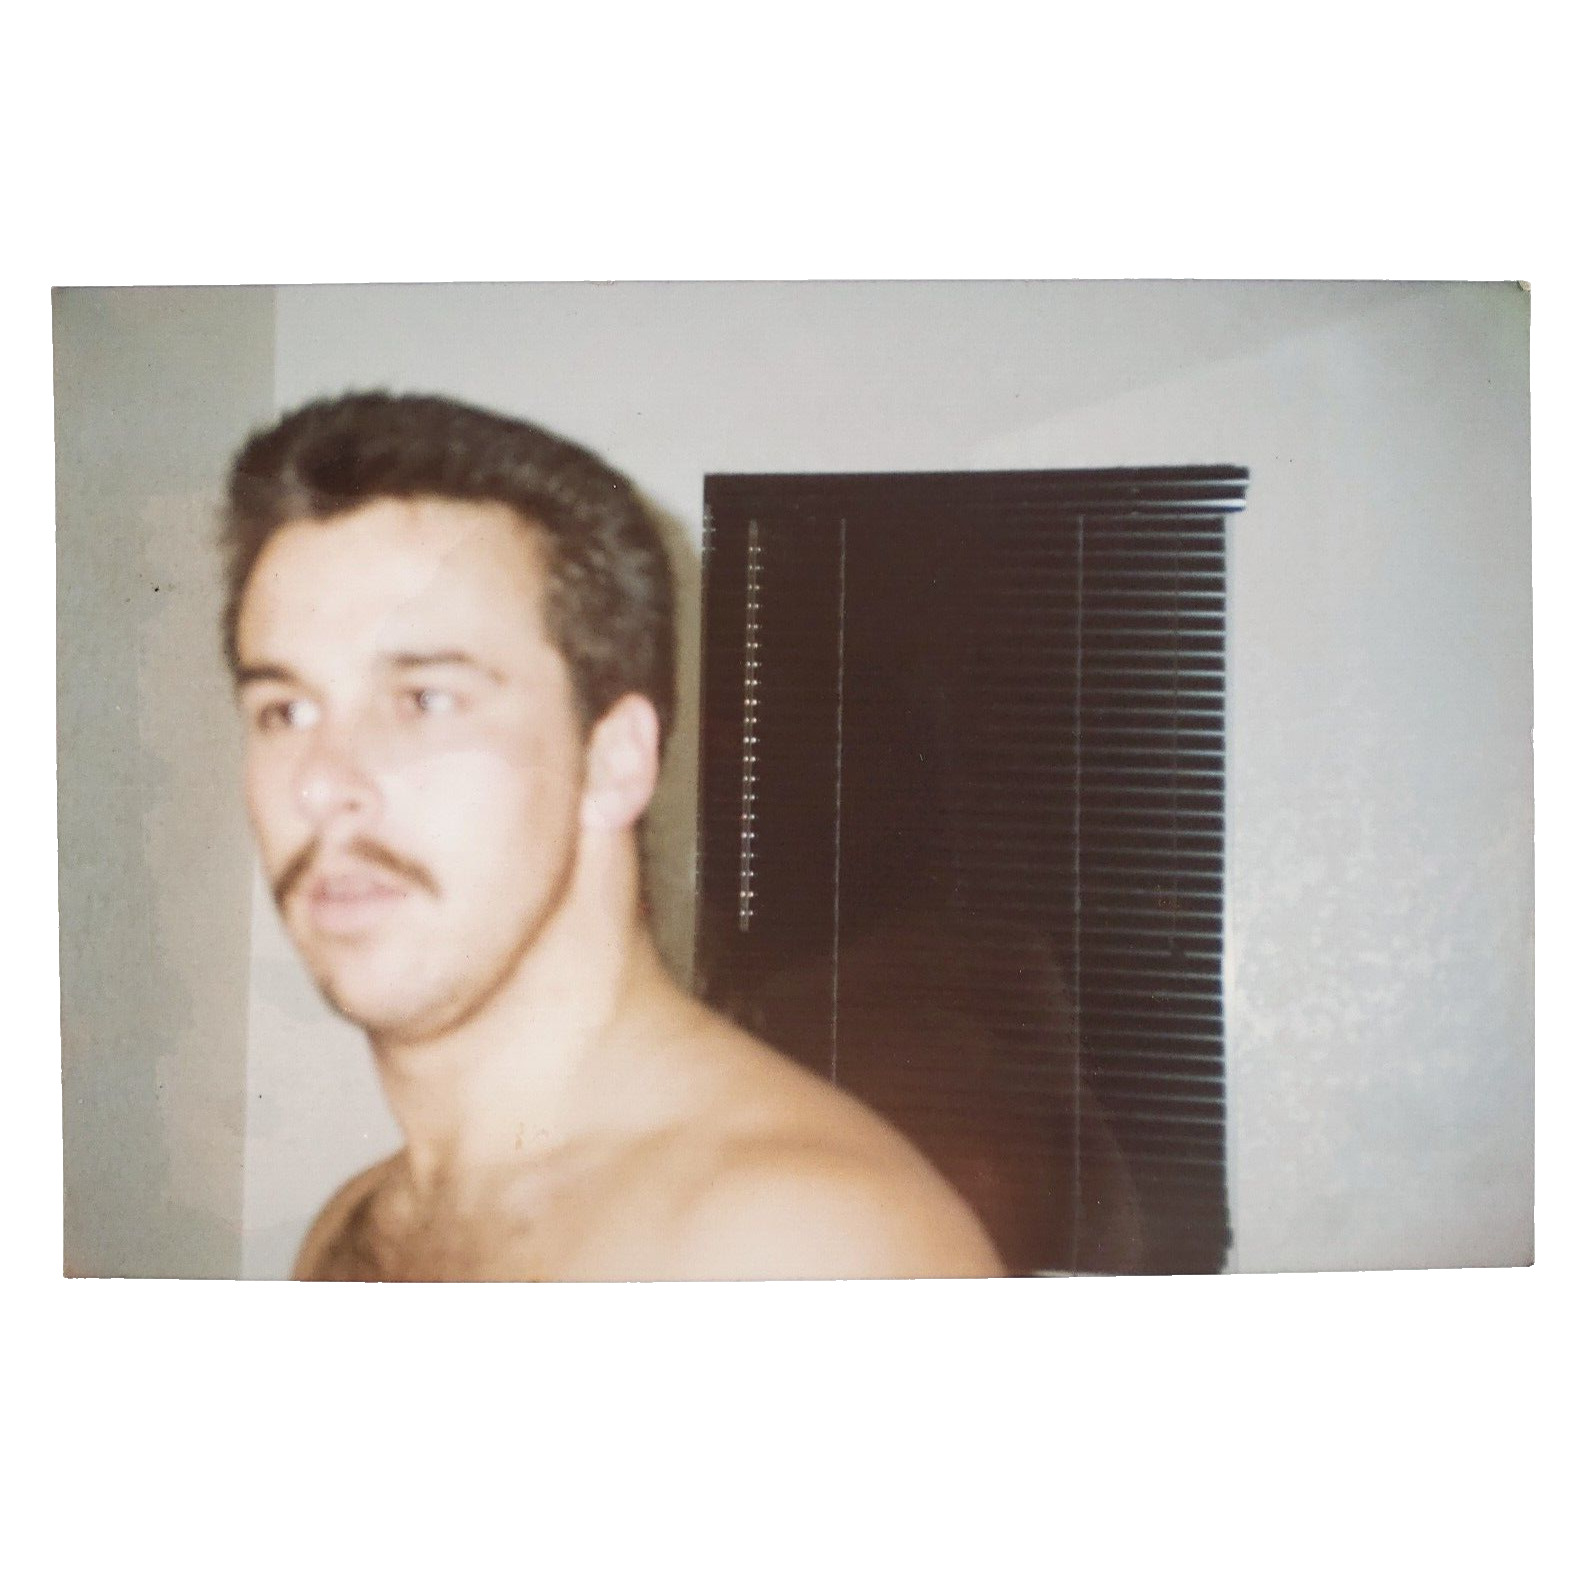 Snapshot of Blurred Man with Mustache 1990s Shirtless Guy & Window Shade C3538